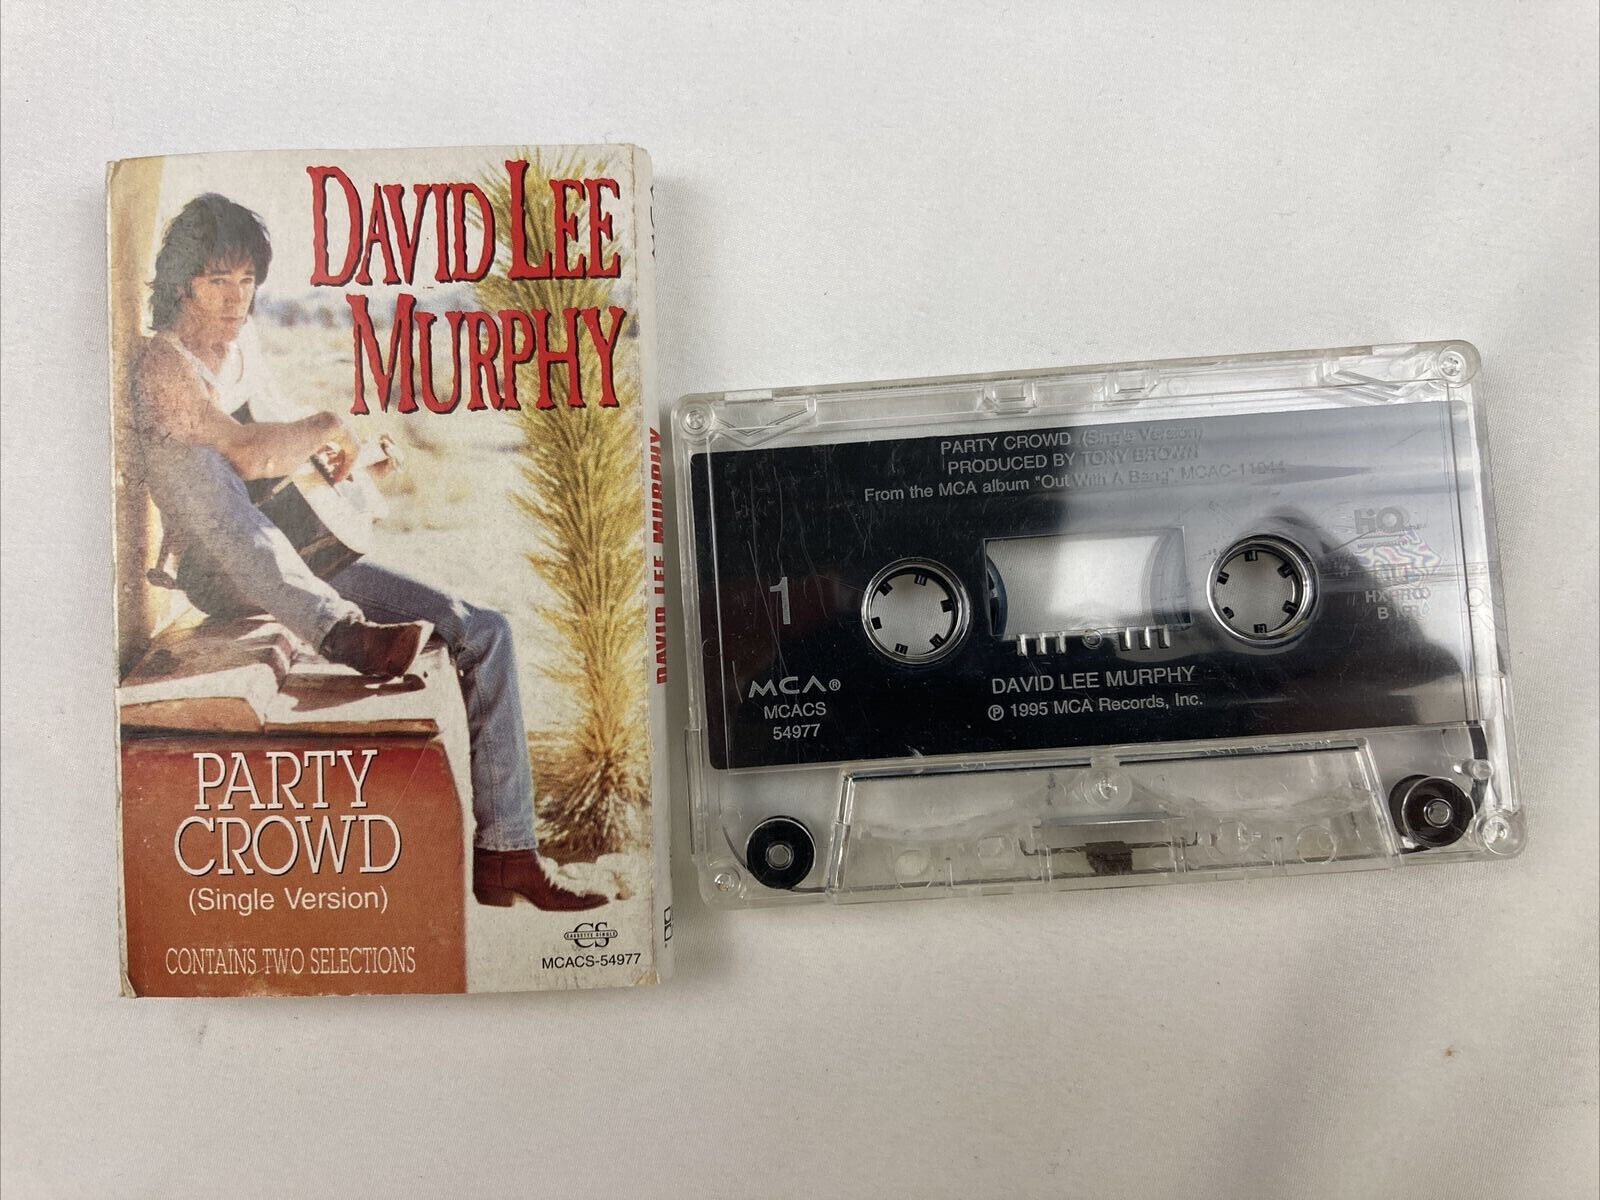 Party Crowd [Single] by David Lee Murphy (Cassette, 1995, MCA)